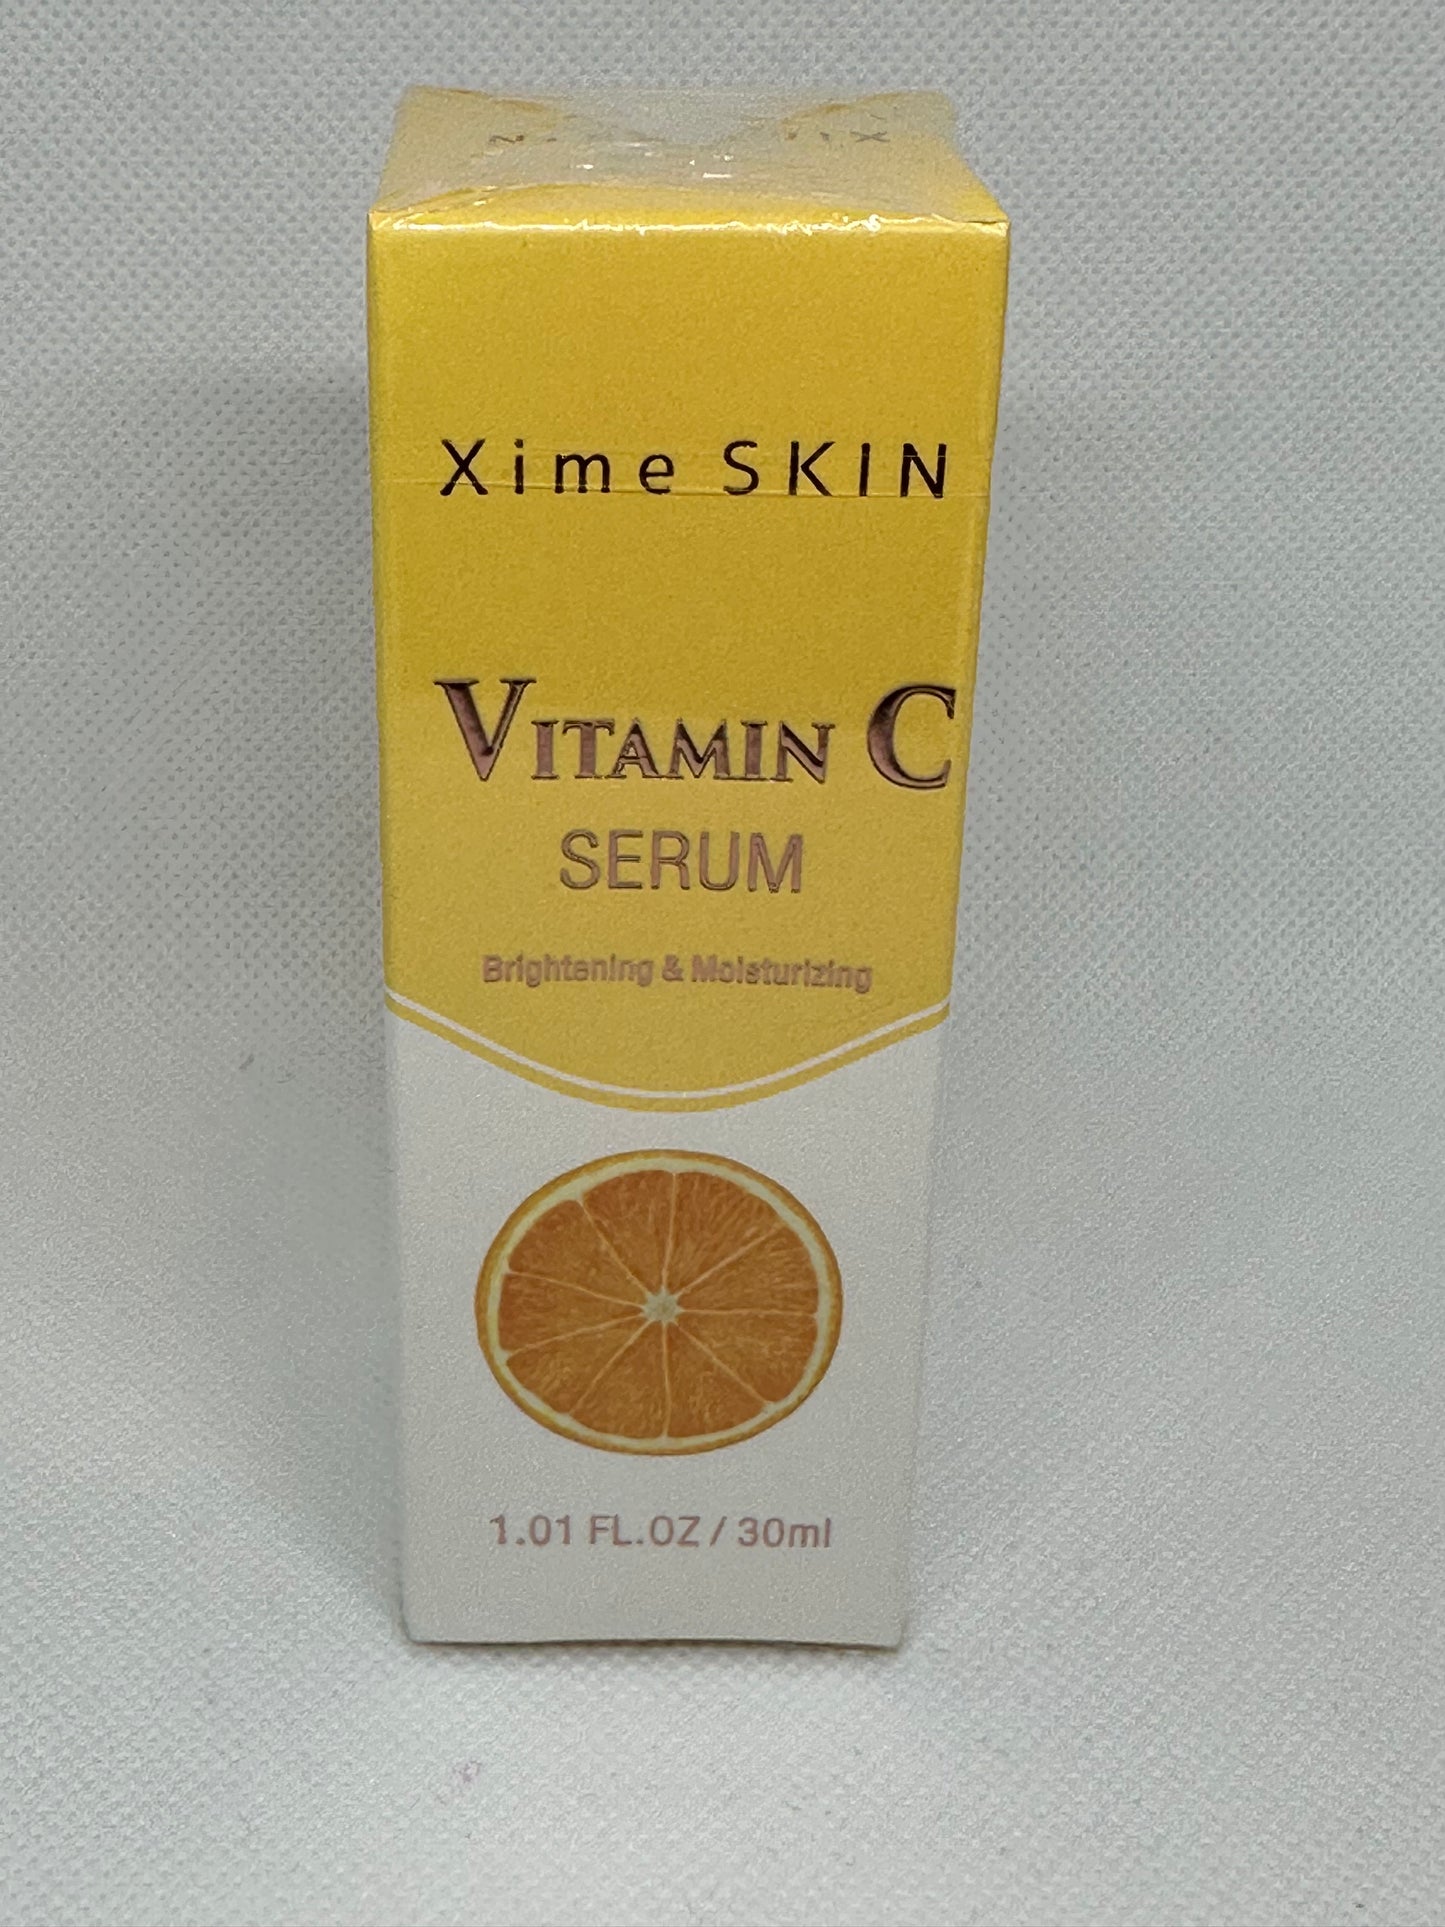 Xime Skin (Vitamin C Serum)